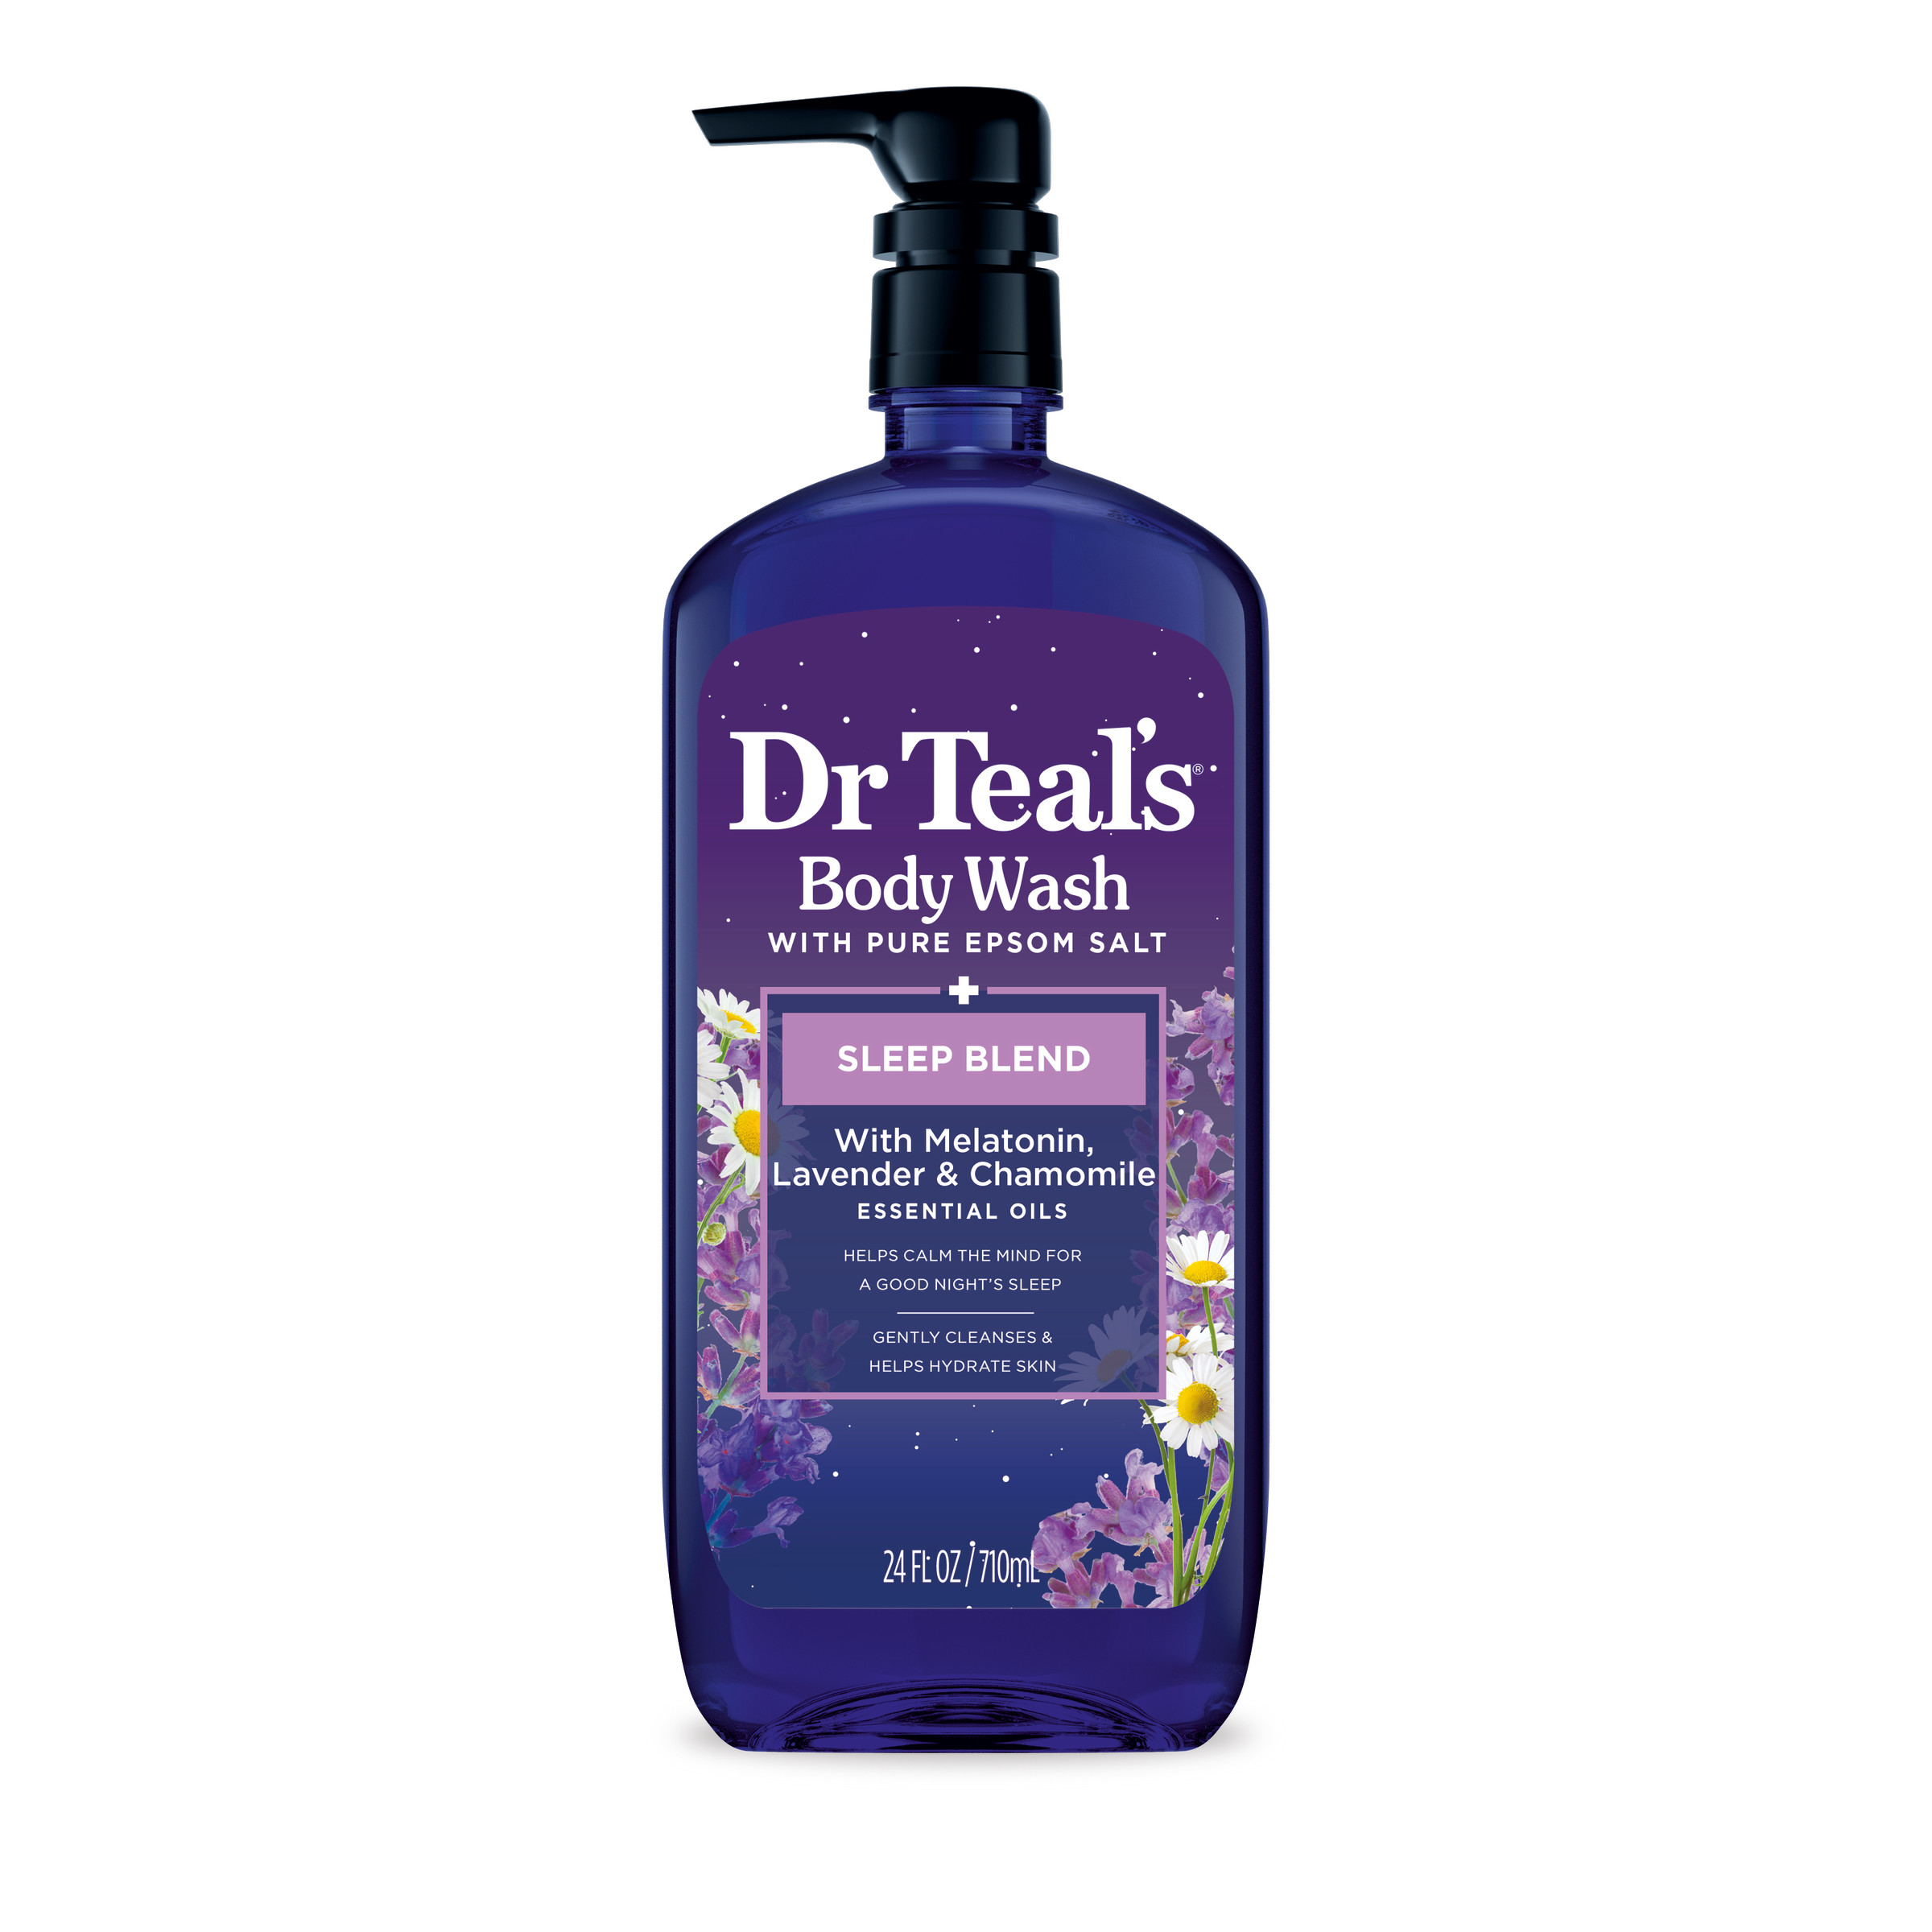 Dr Teal's Sleep Body Wash with Melatonin, Lavender & Chamomile & Essential Oil Blend, 24 fl oz - image 1 of 10